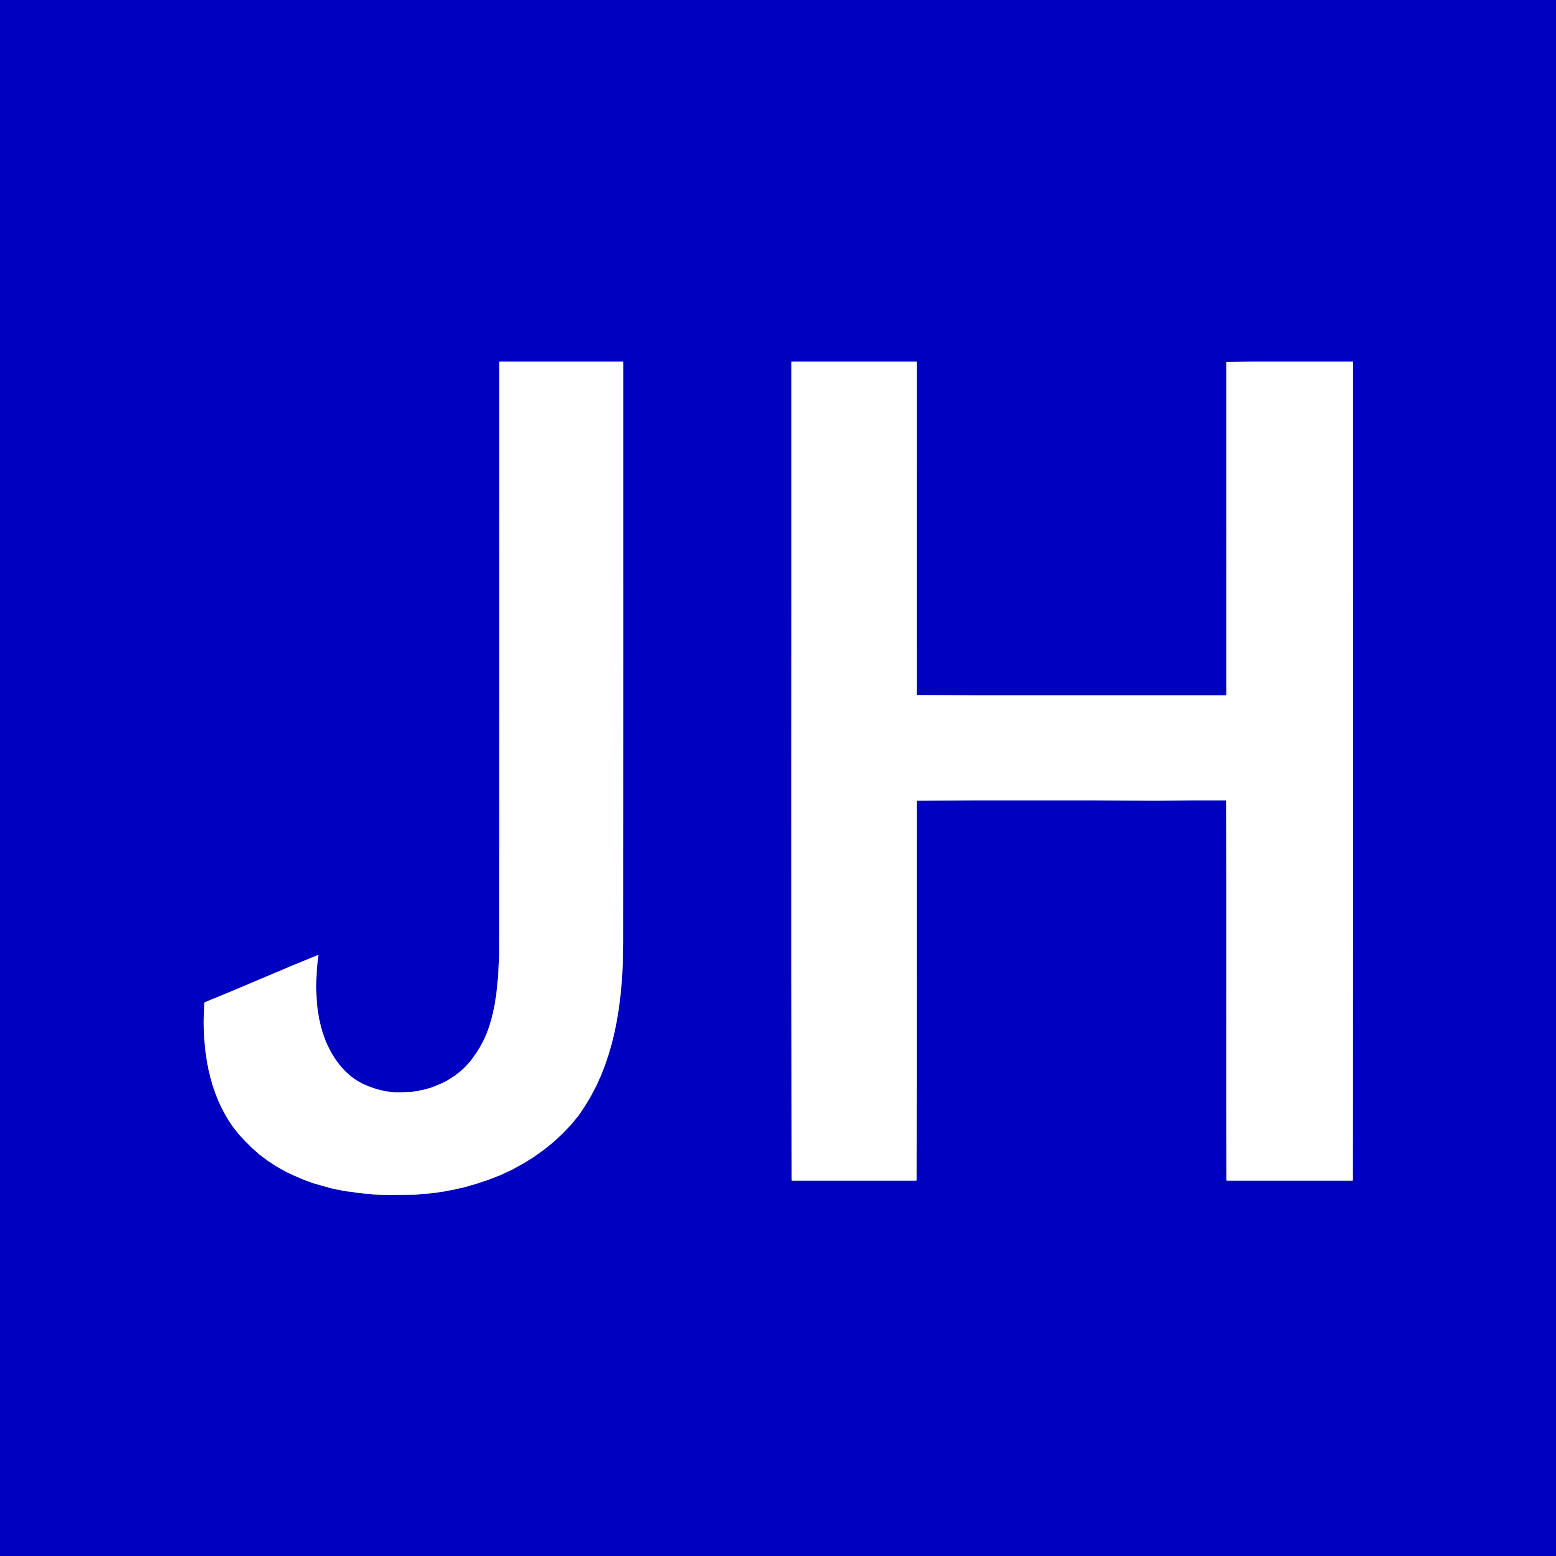 John Hancock Investment Management logo (PNG transparent)